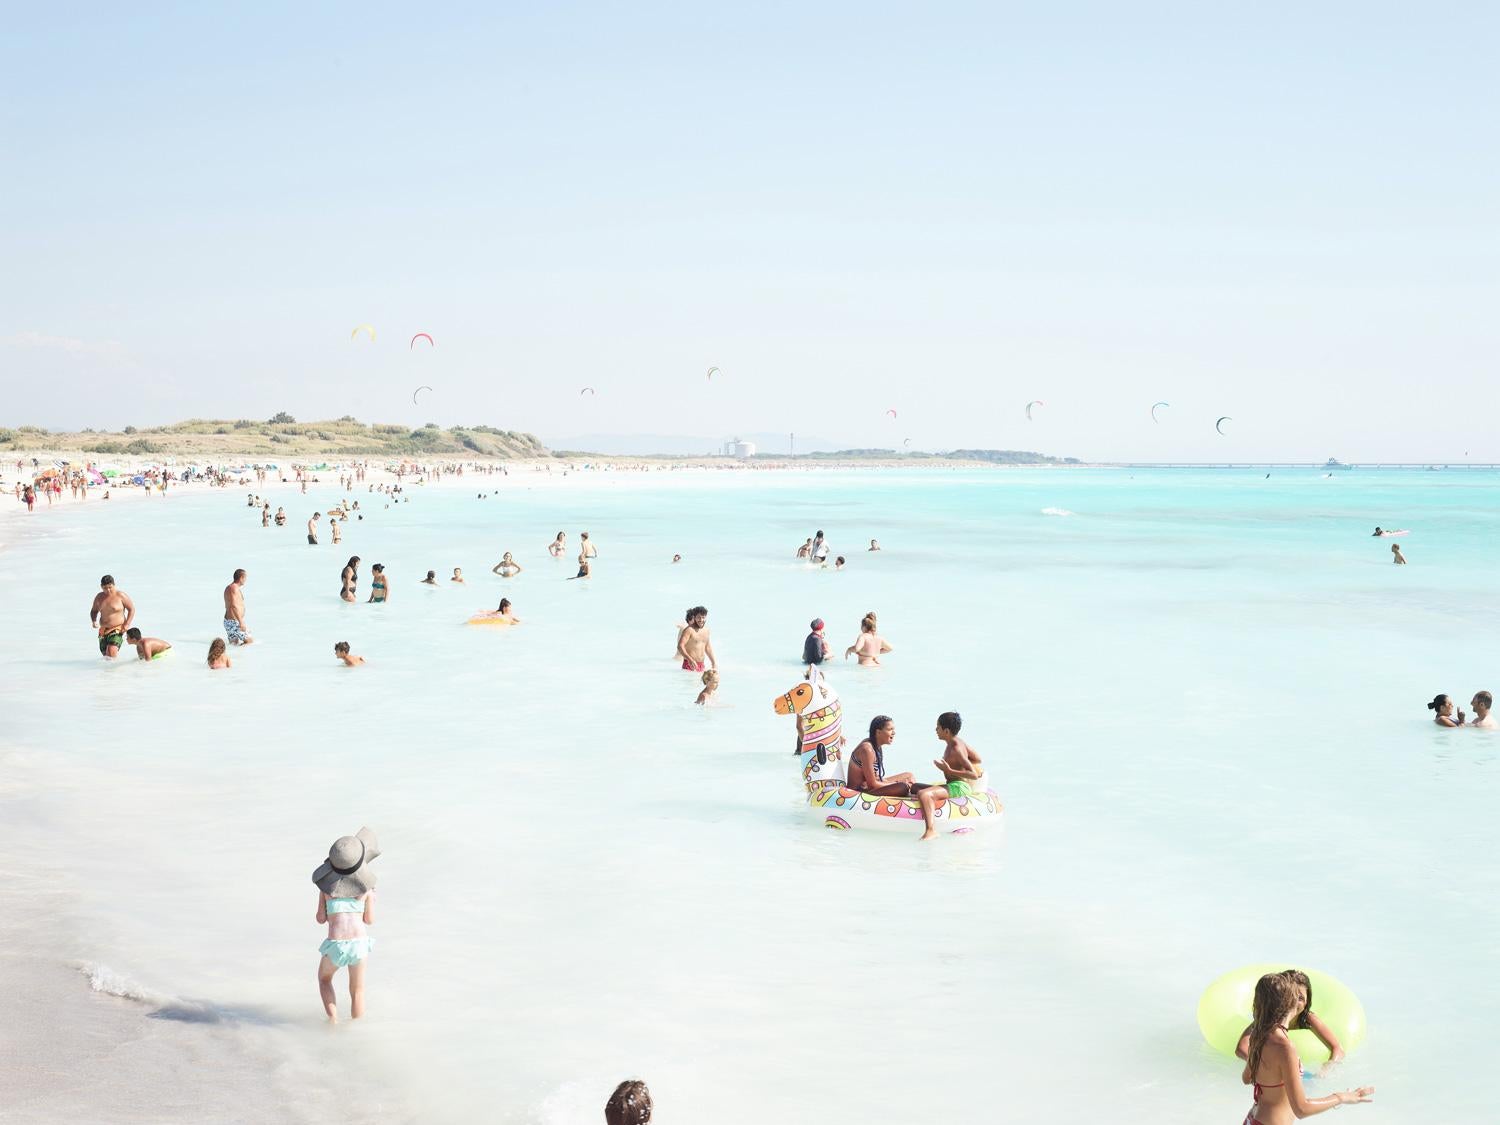 Rosignano Llama - large scale Mediterranean beach scene in Italy (artist framed)